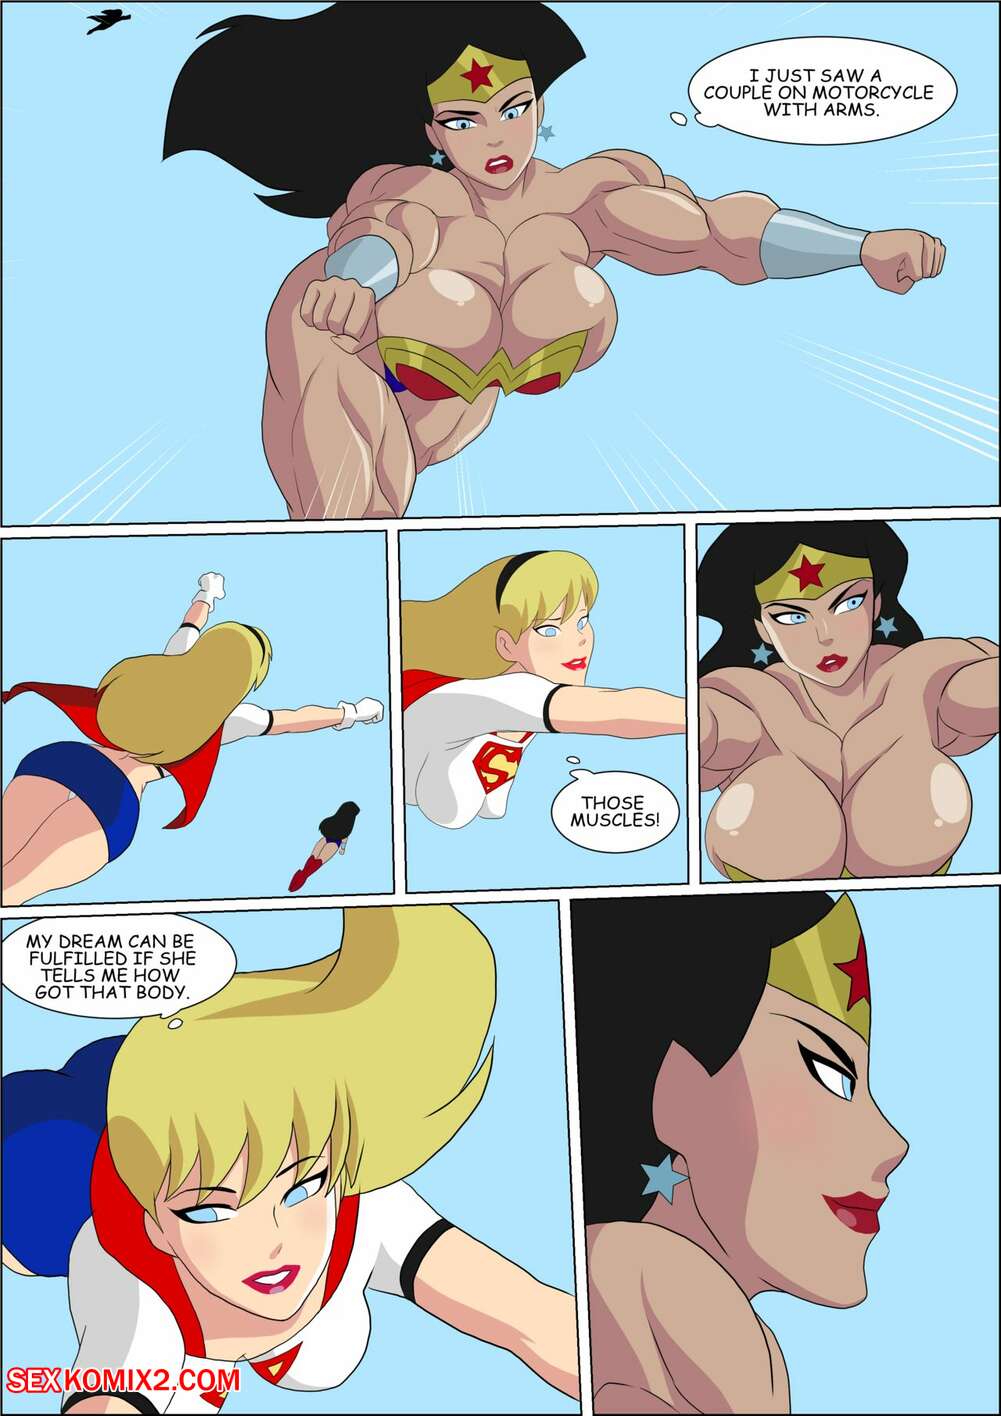 Wonderwomen cartoon porn